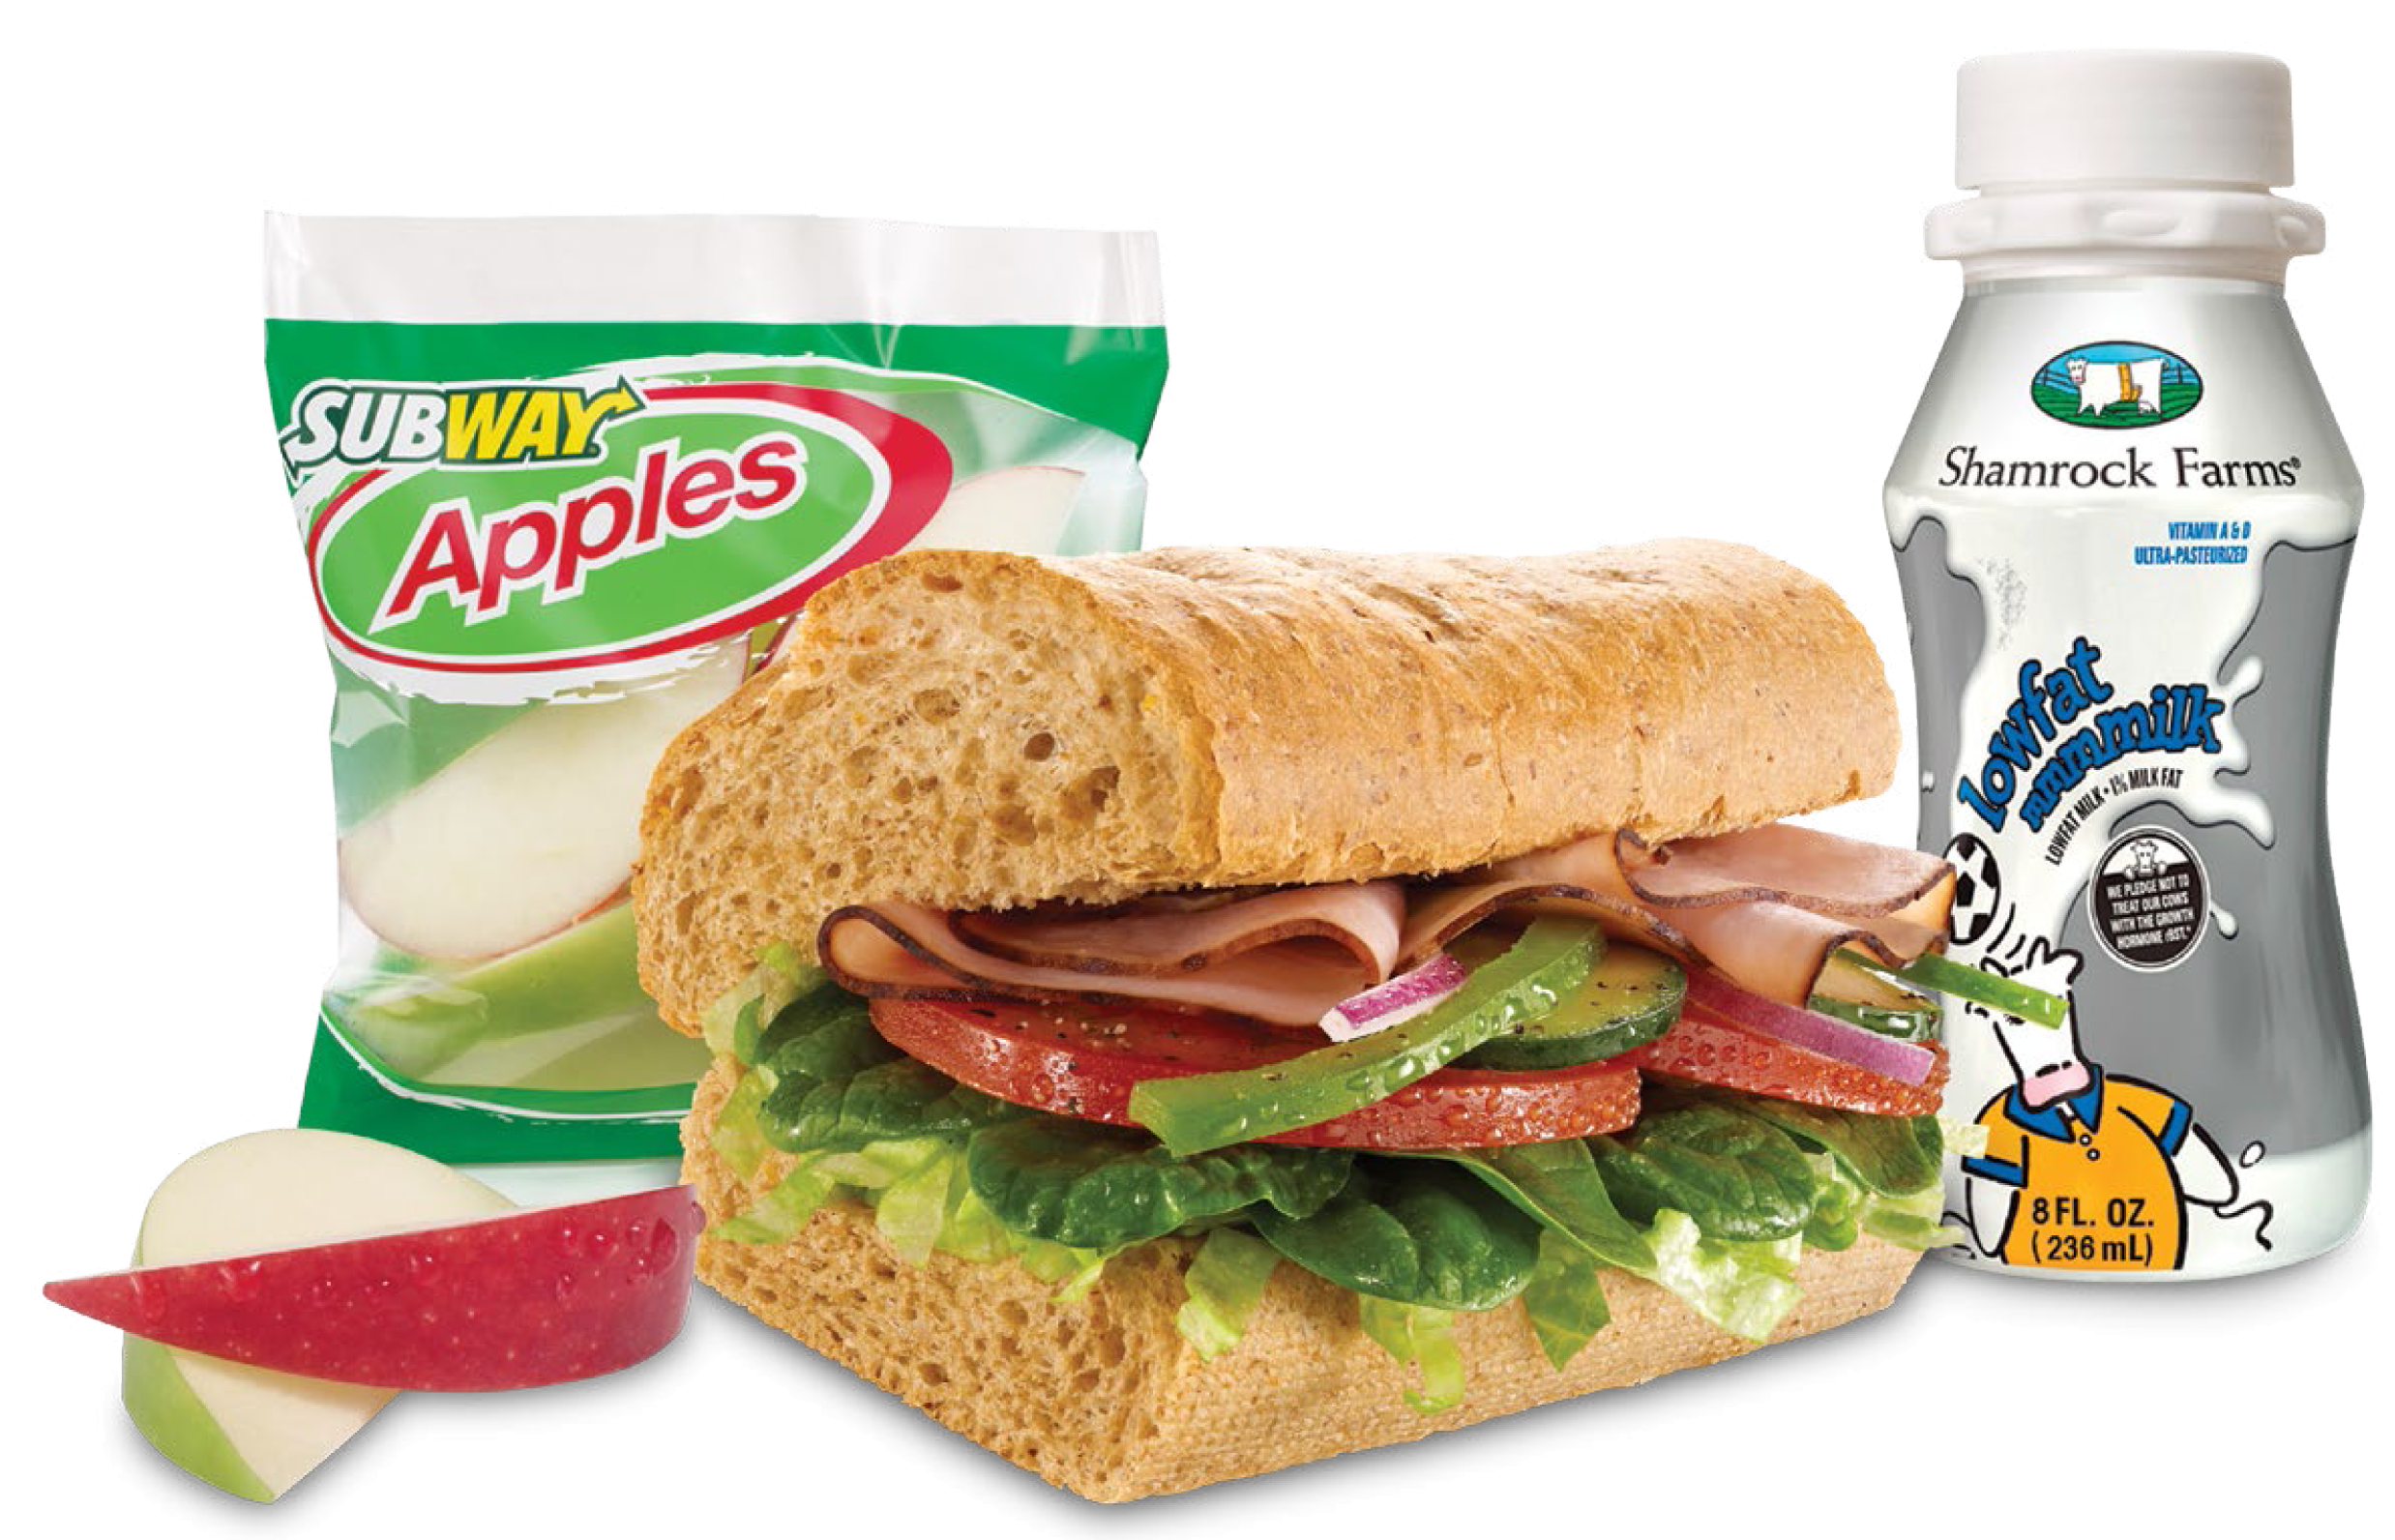 sandwich clipart sandwich subway